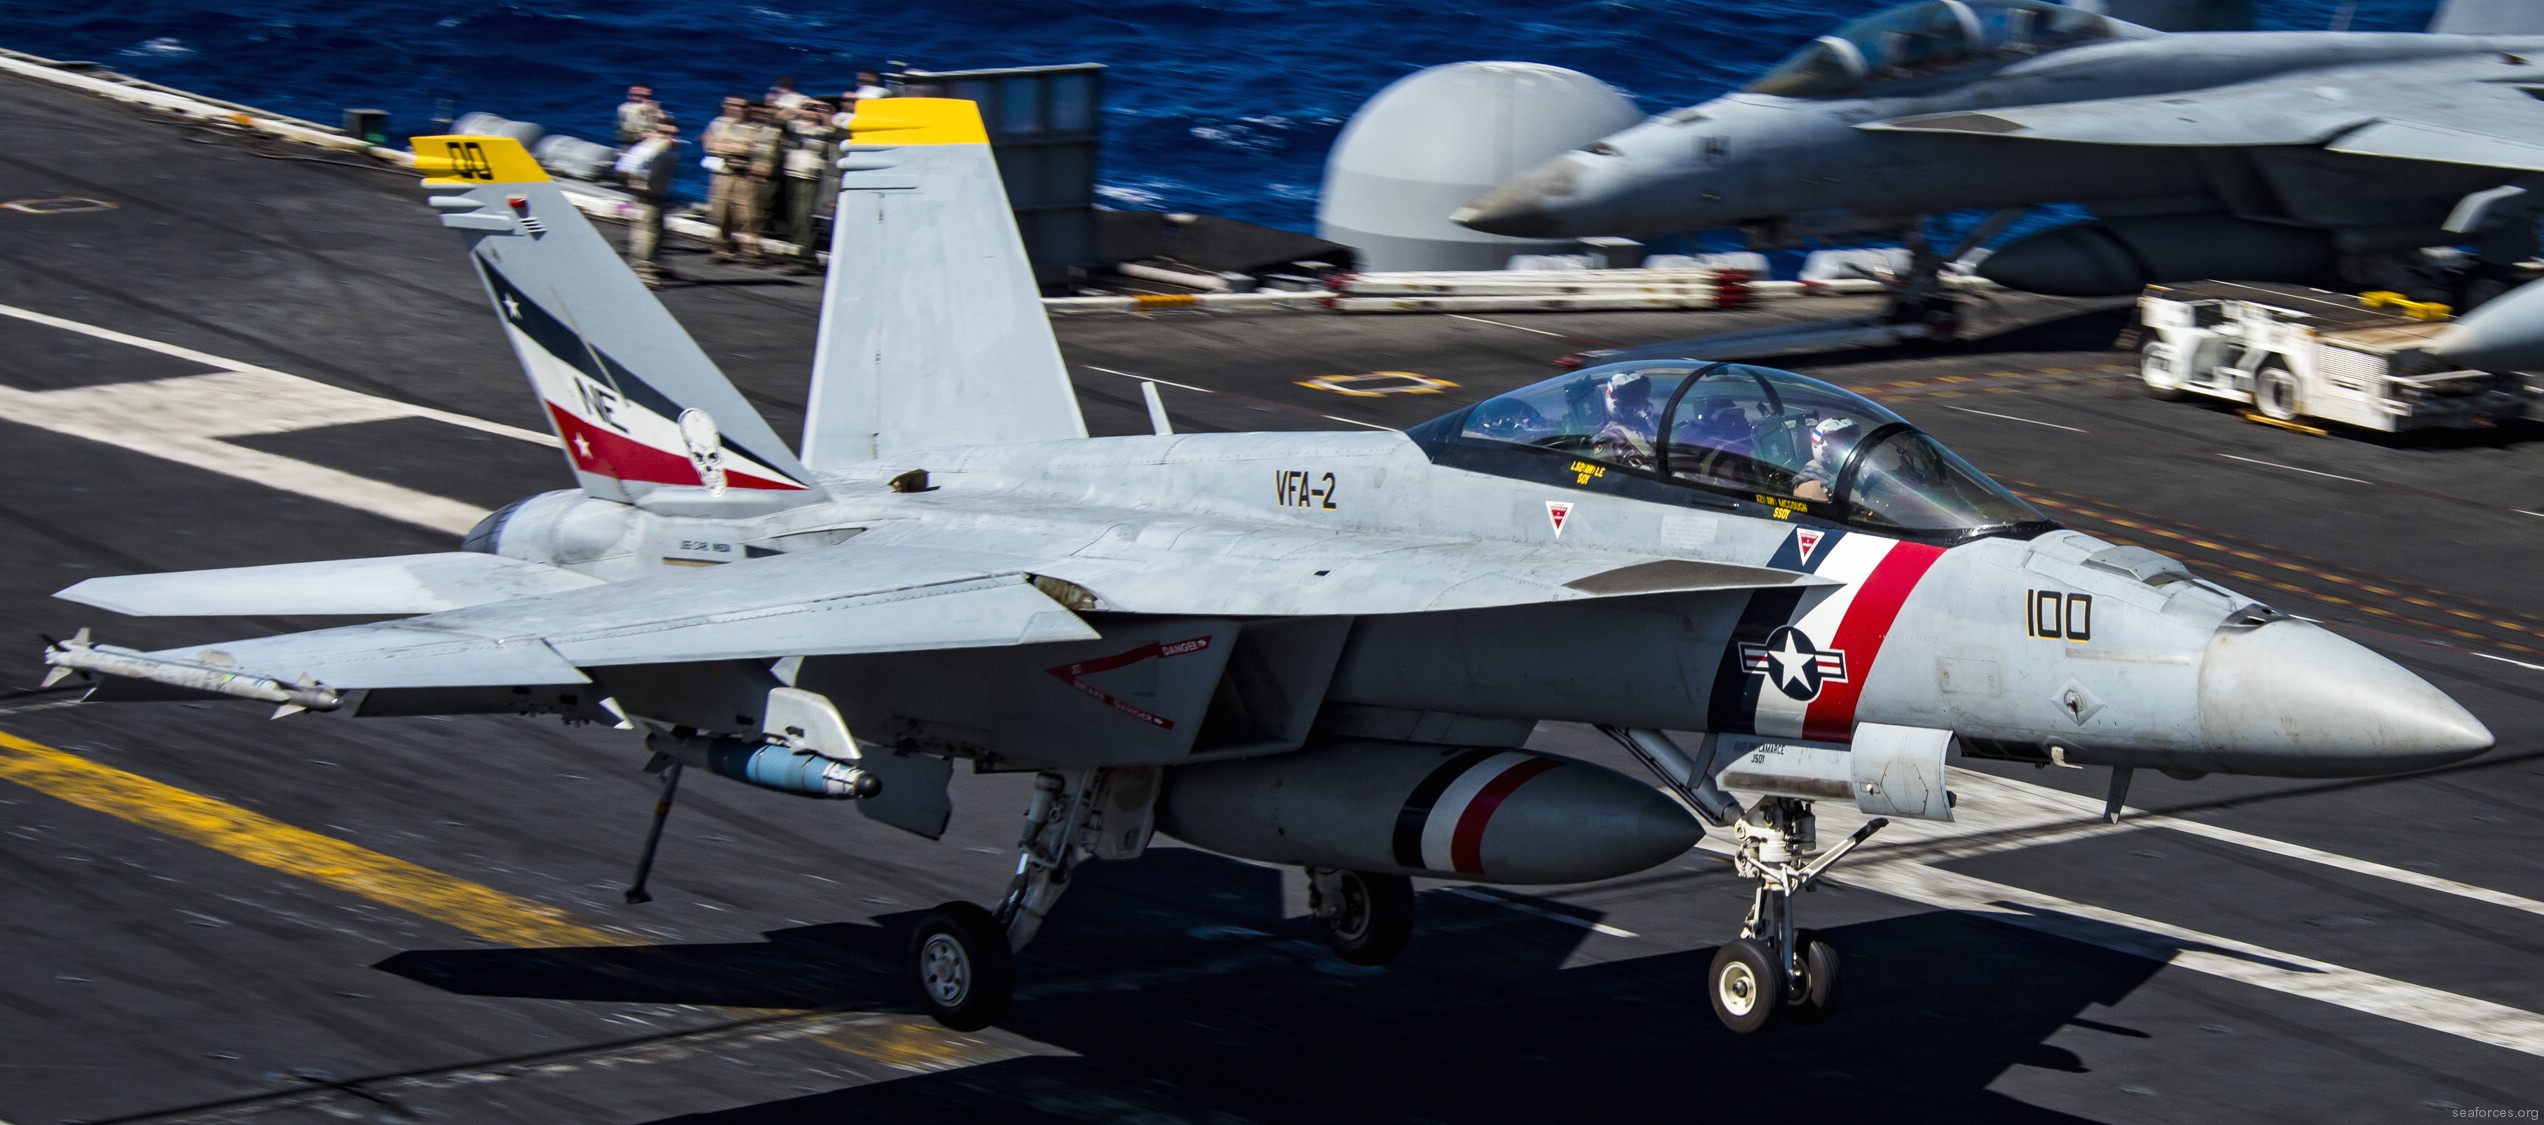 vfa-2 bounty hunters strike fighter squadron us navy f/a-18f super hornet carrier air wing cvw-2 uss carl vinson cvn-70 46